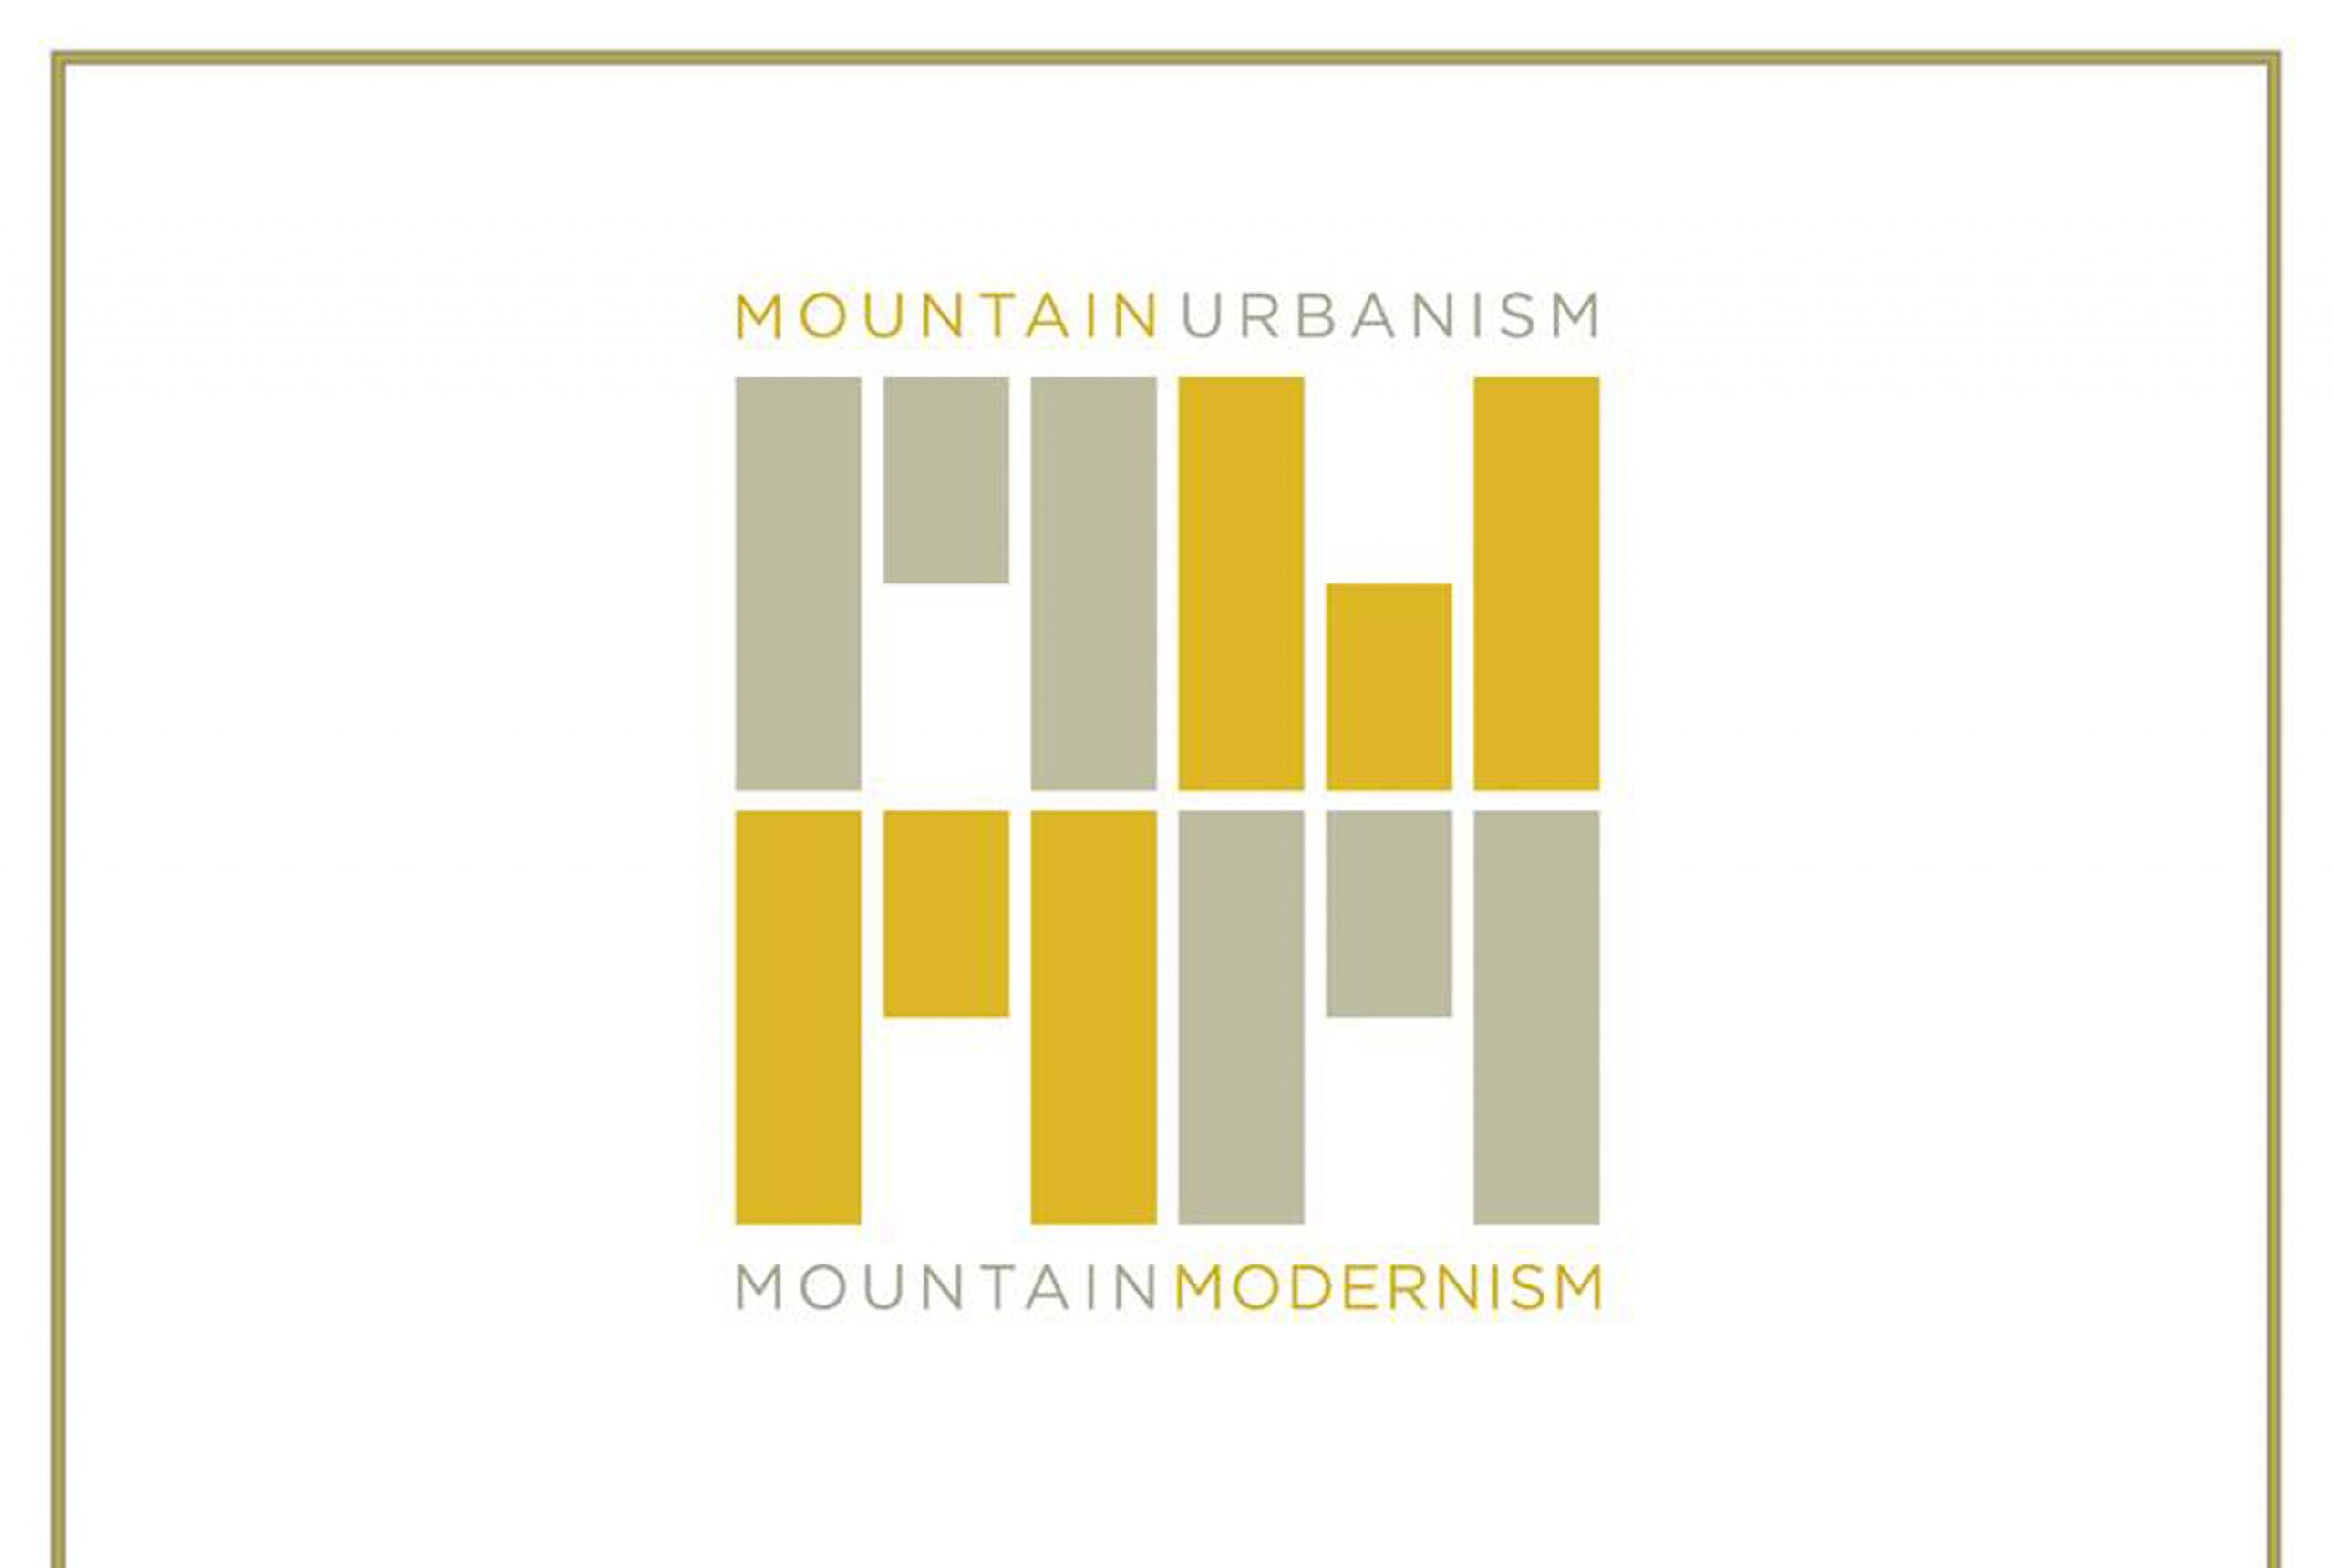 Mountain Modernism, Mayor's symposium on Thursday, Feb. 13, 2014.